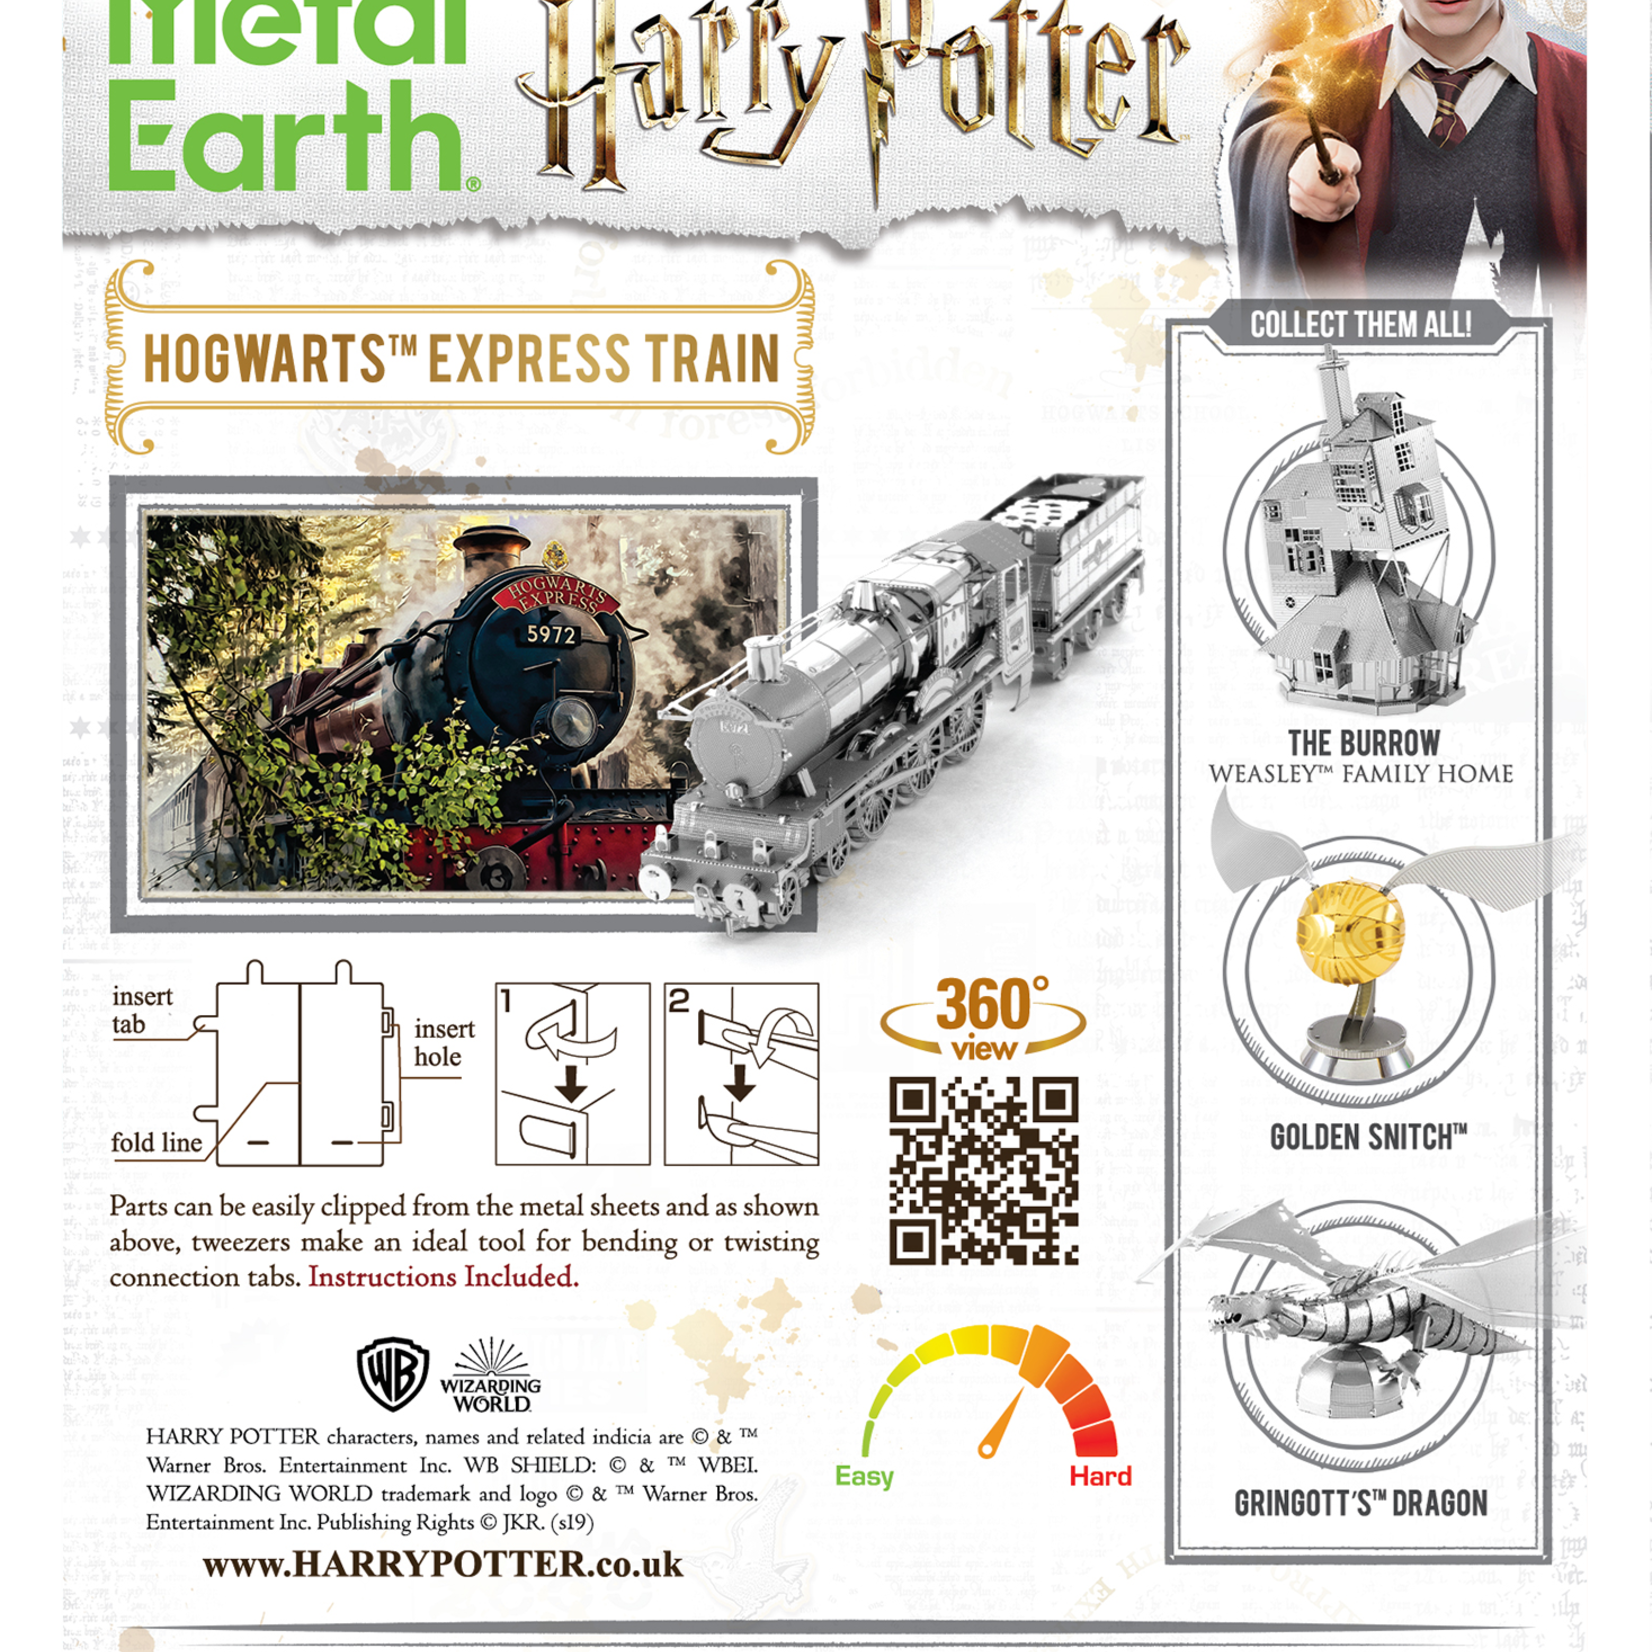 Metal Earth Metal Earth - Harry Potter : Hogwarts Express